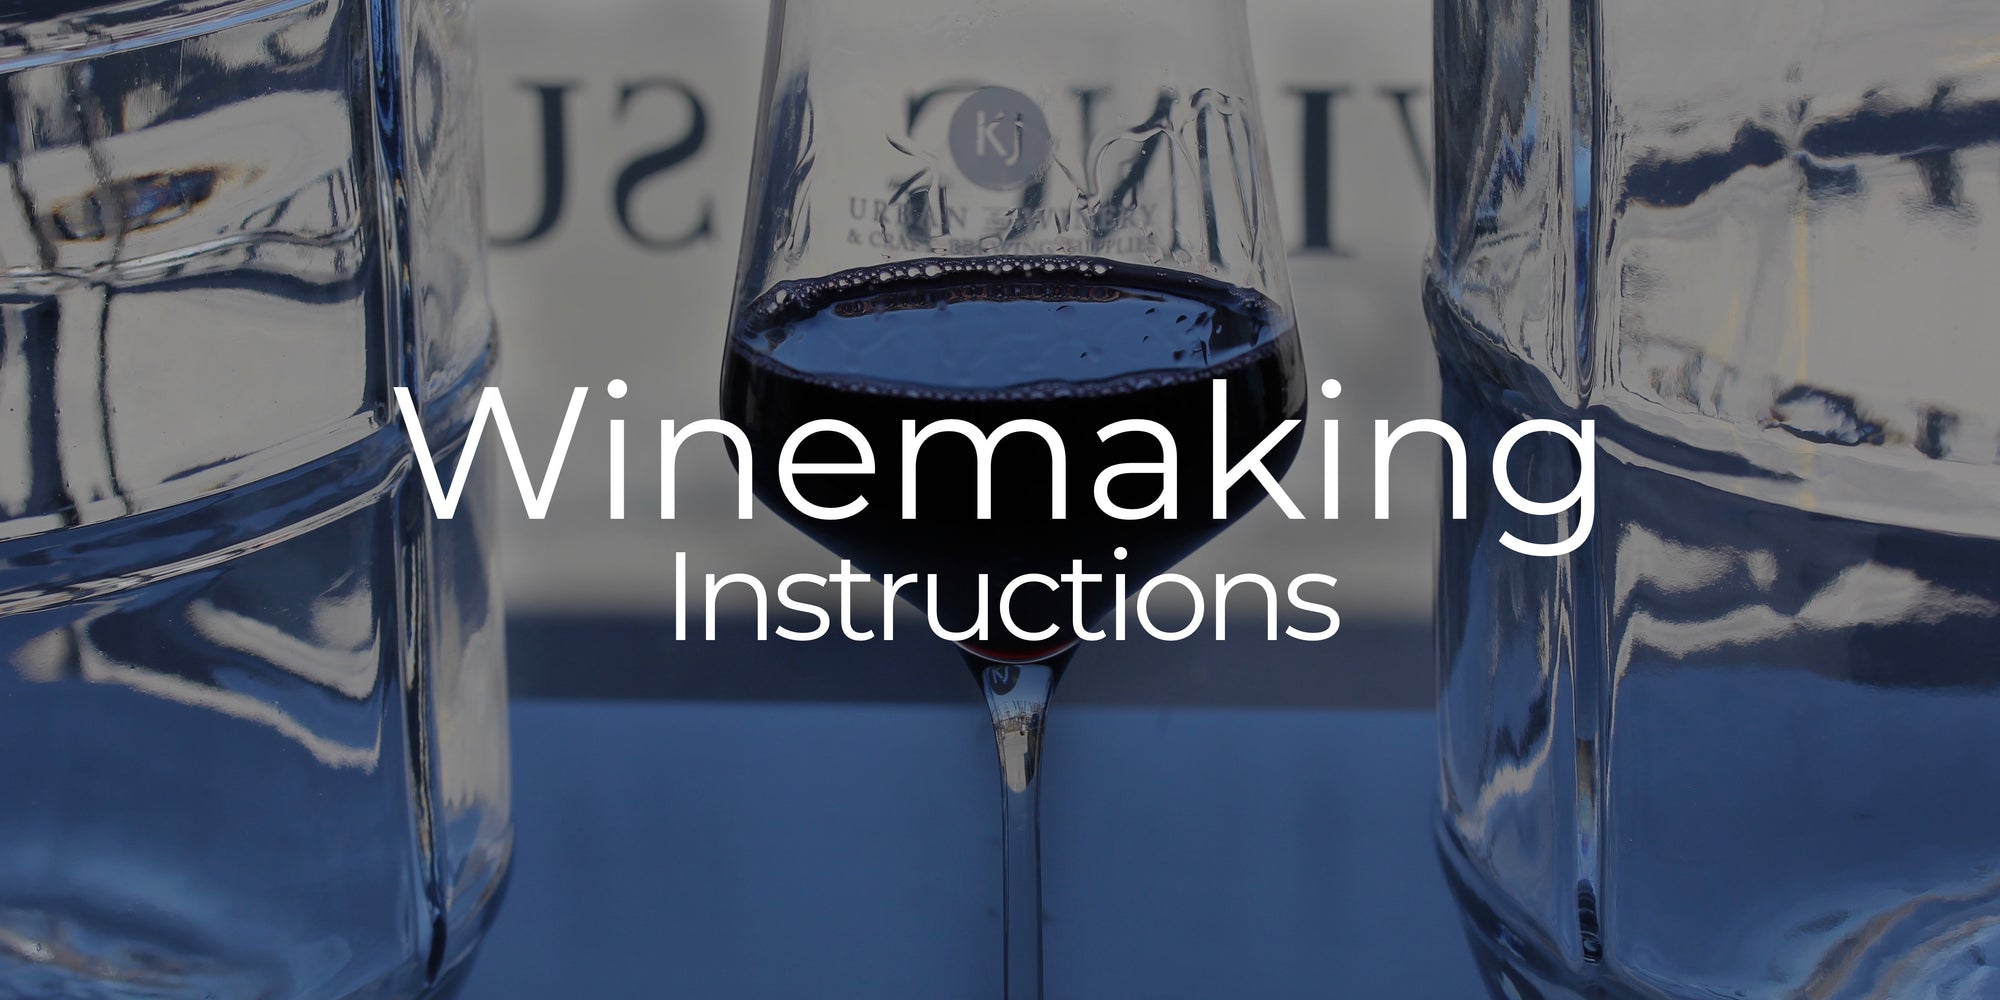 Winemaking Instructions